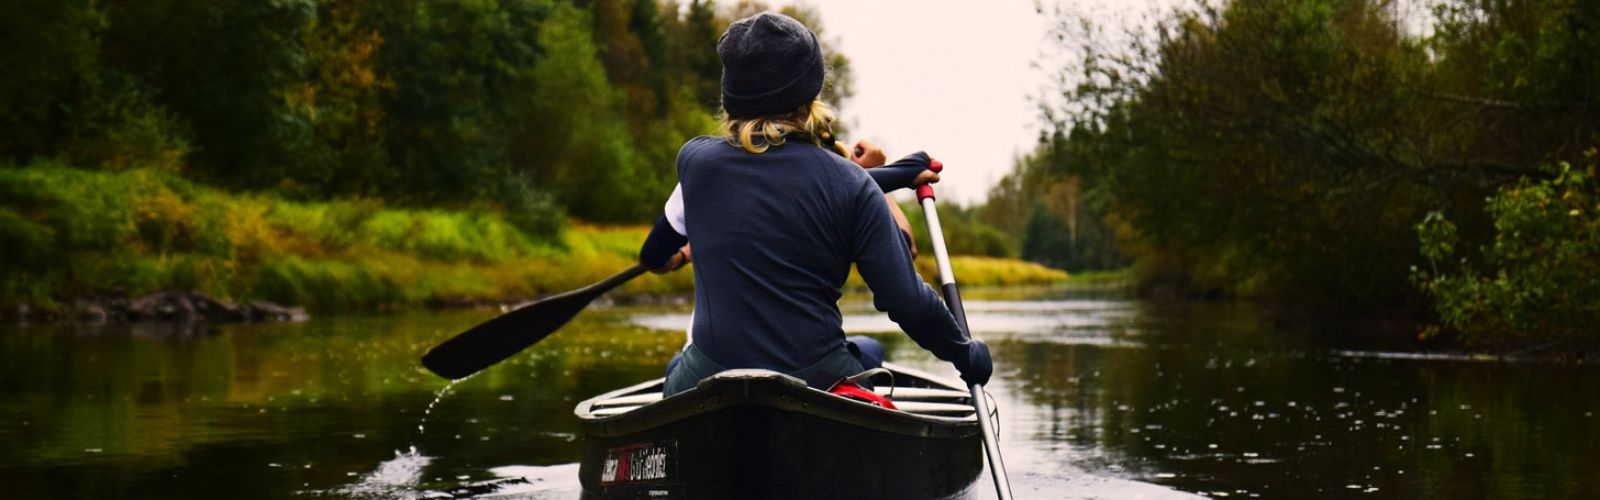 canoe on water